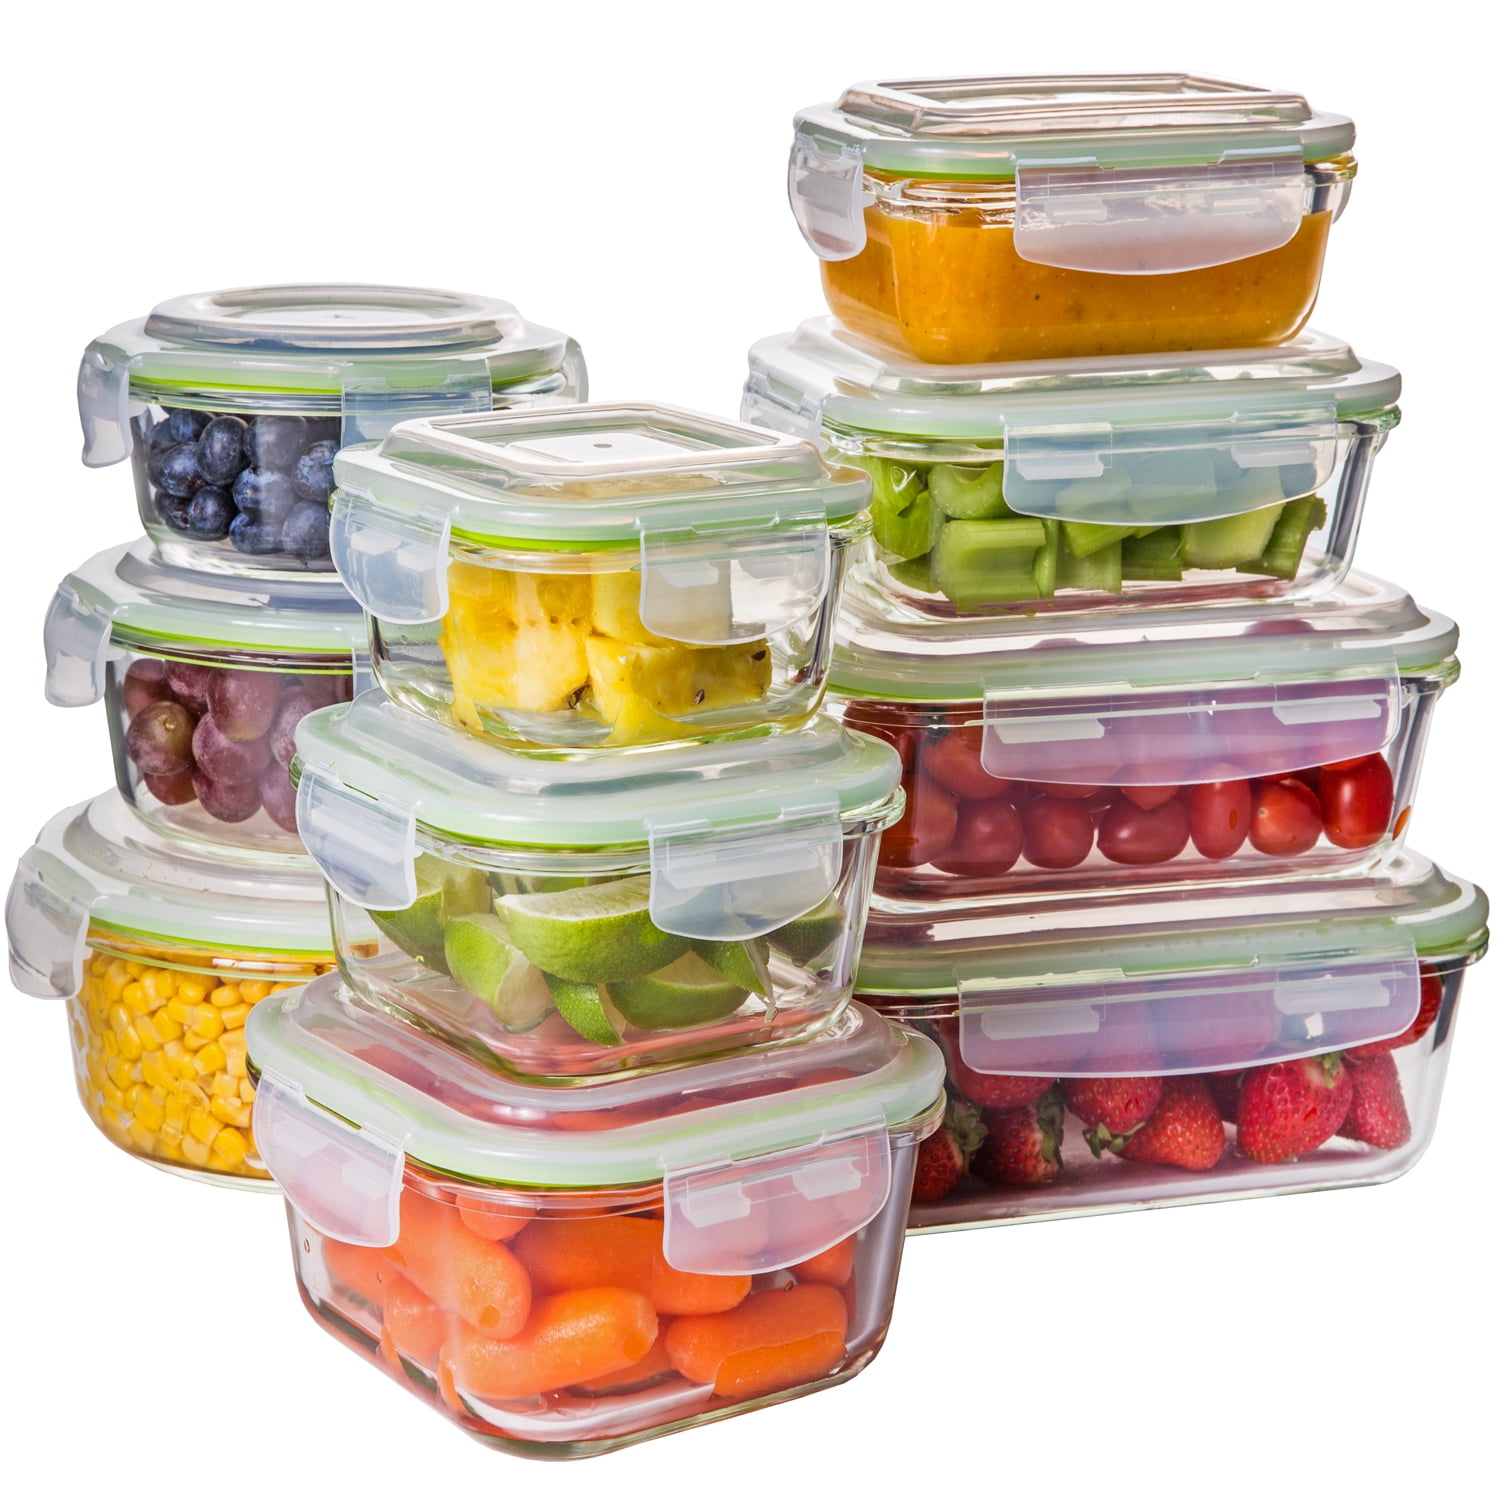 Zenware 20 Piece Microwave Safe Glass Food Storage Container Set (10